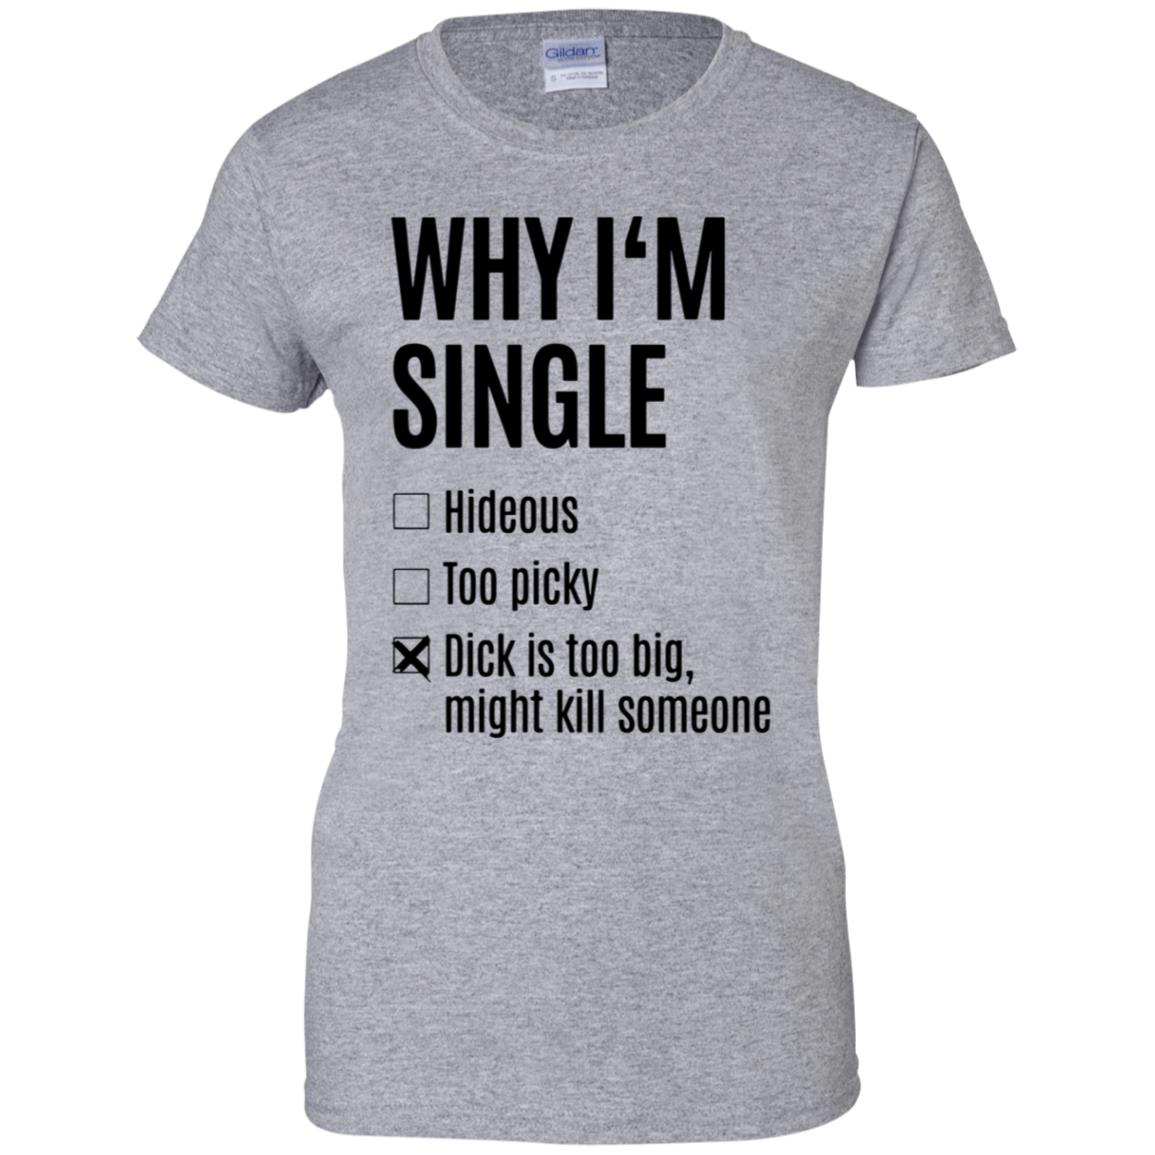 I'm Single Shirt - 10% Off - FavorMerch